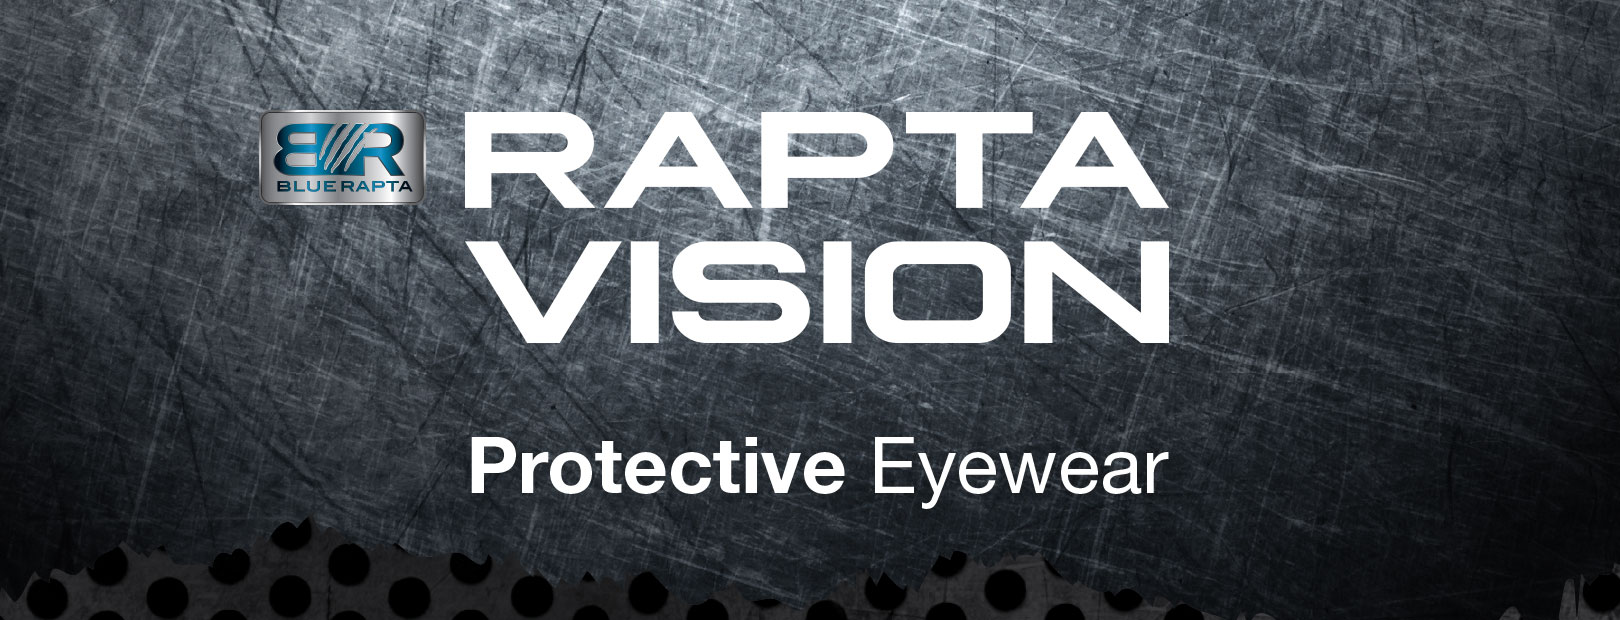 BLUE RAPTA | Rapta Vision at RSEA Safety Online - The Safety Experts